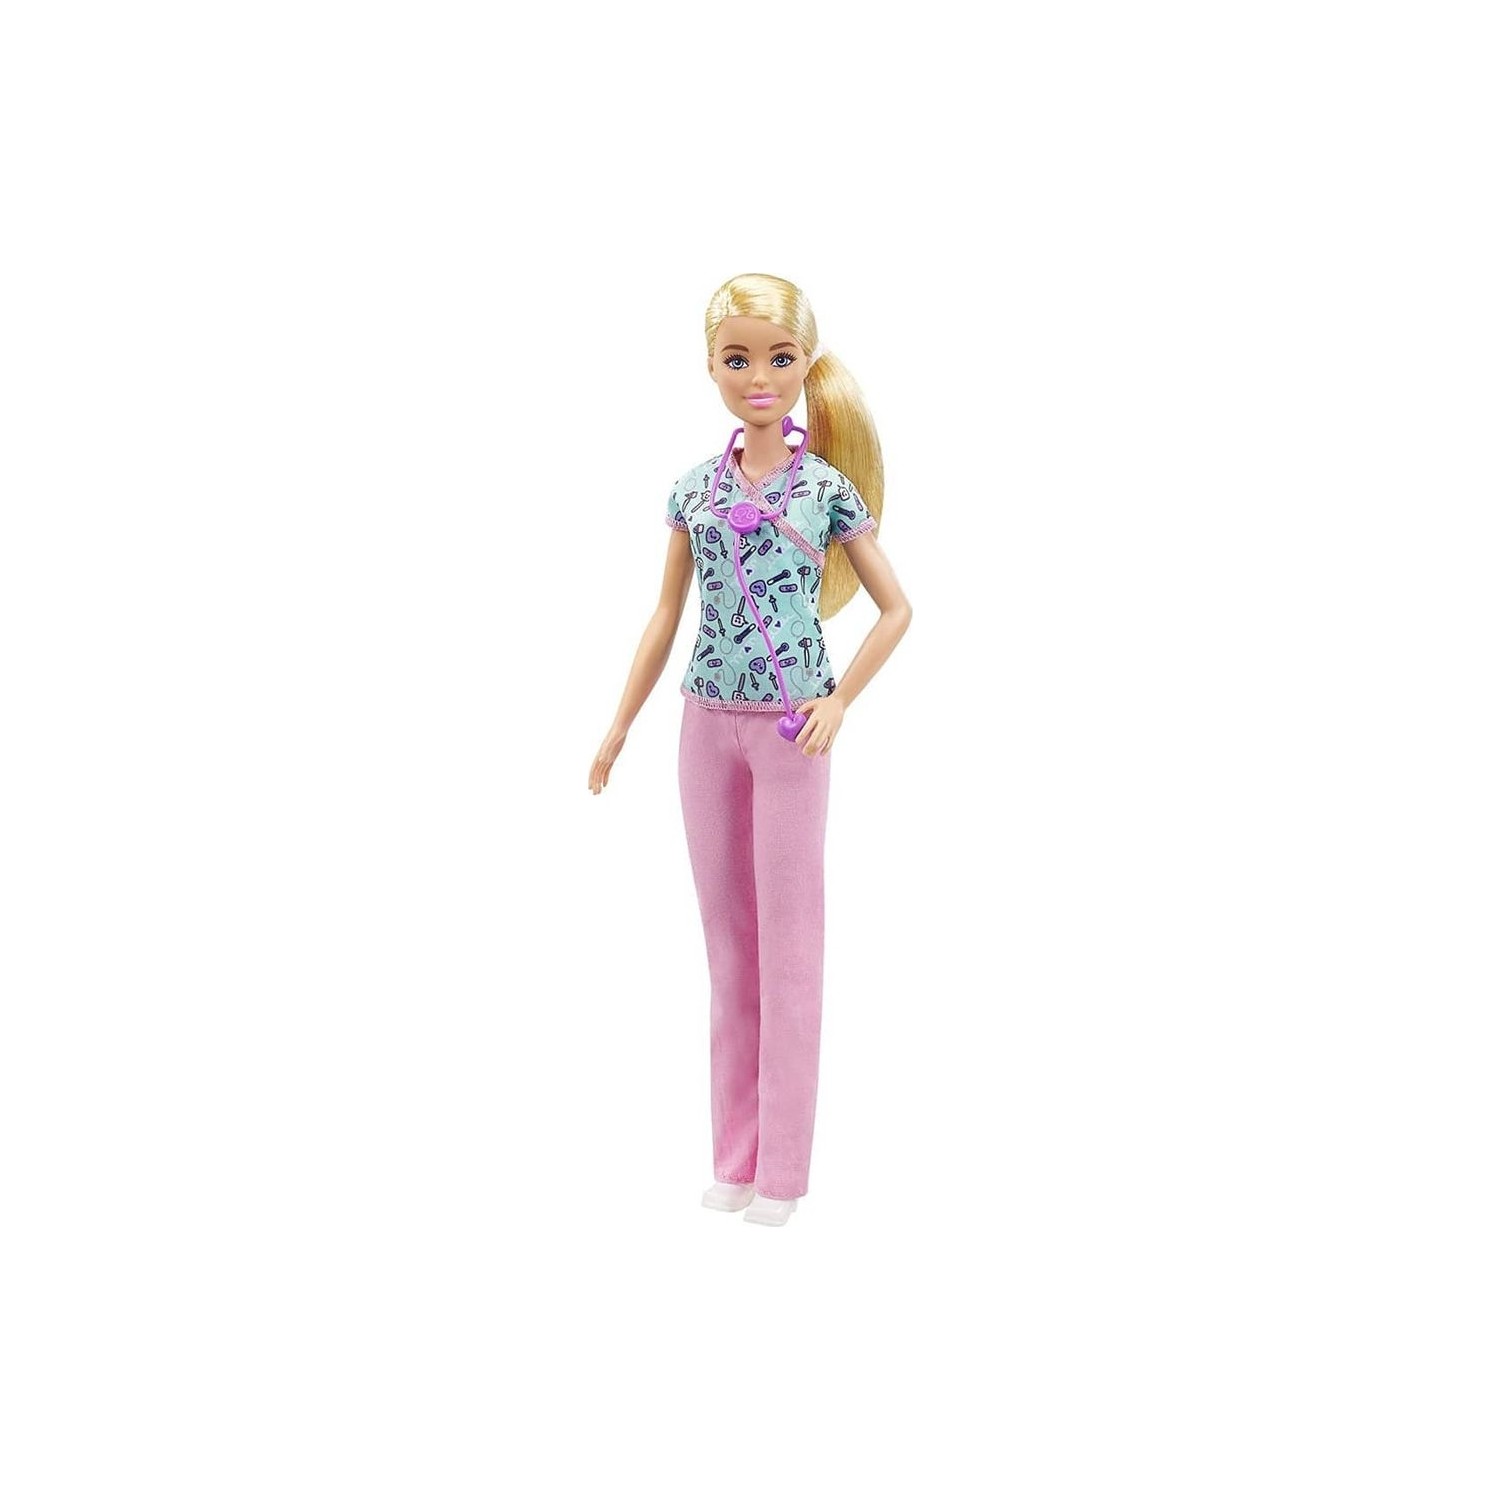 Кукла Barbie Медсестра кукла mattel barbie из серии кем быть dvf50 gtw39 педиатр